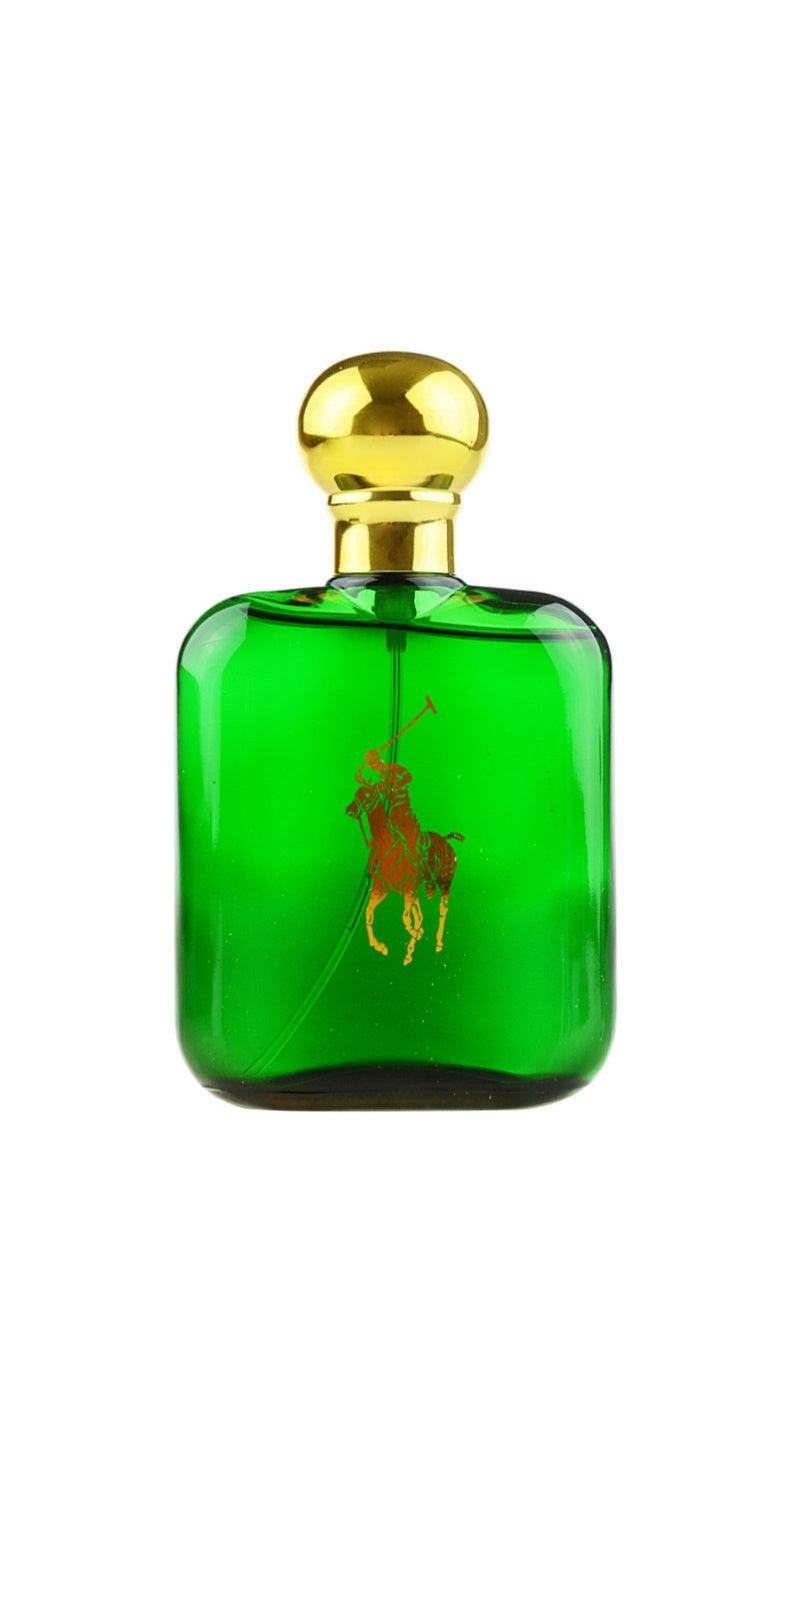 Ralph Lauren Polo Green Classic EDT Spray for Men - Tester - Perfume Oasis